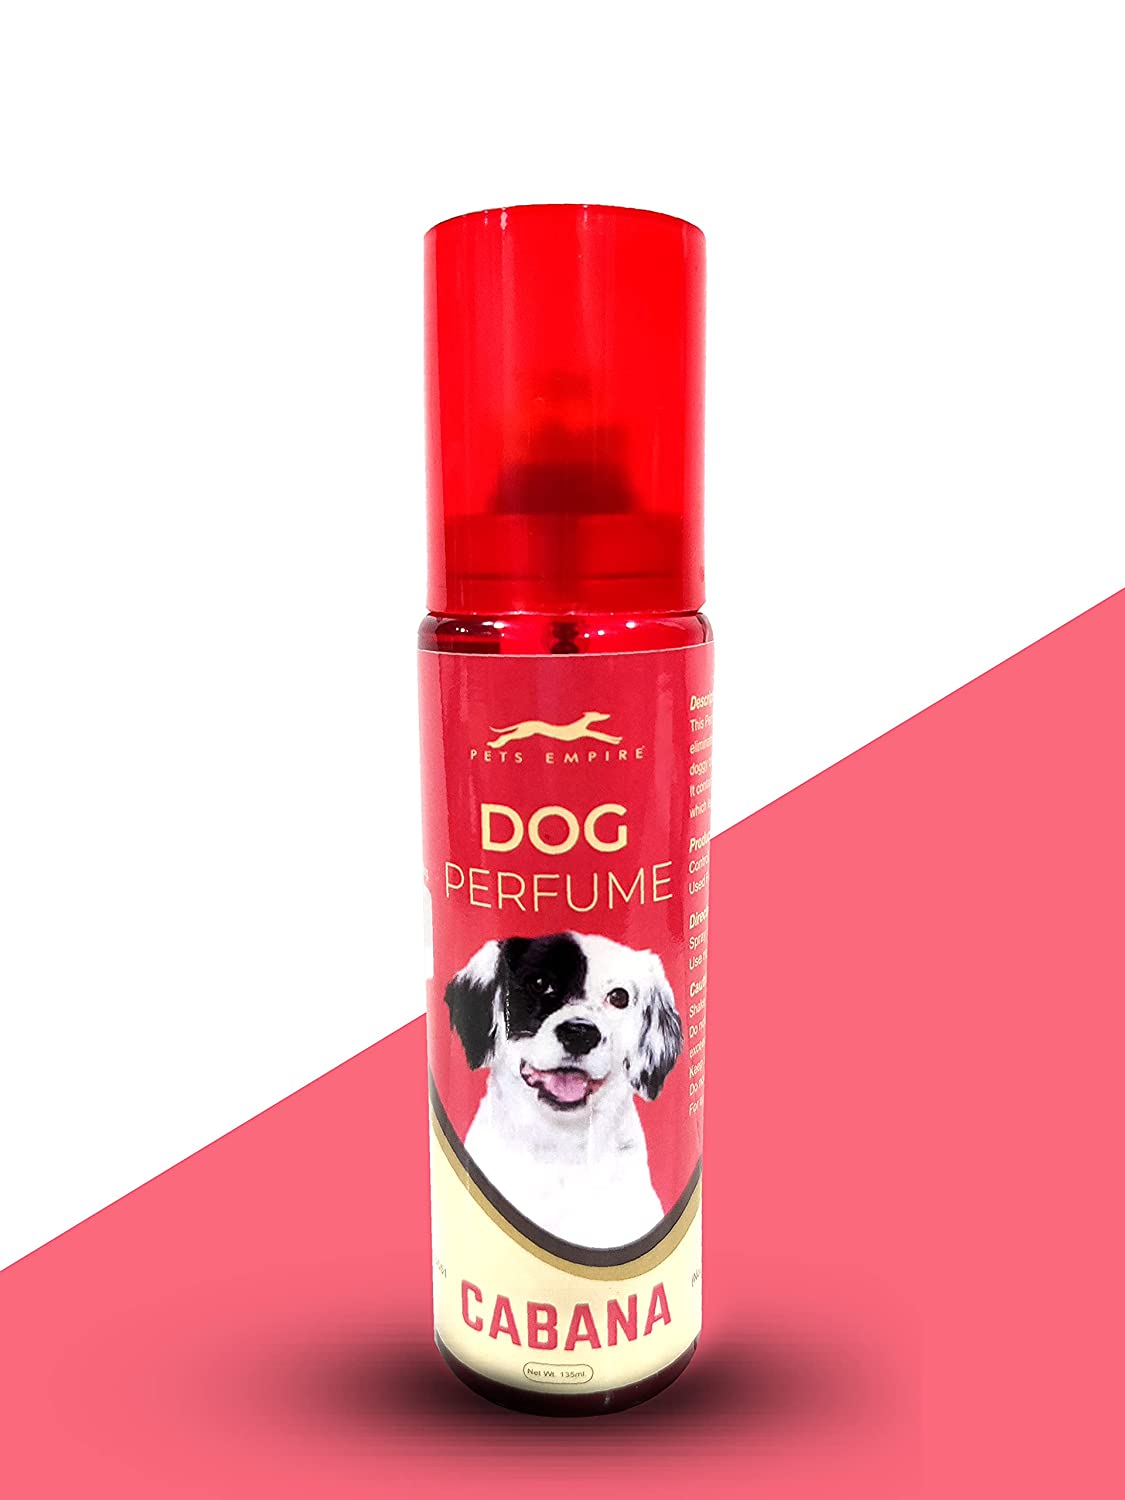 Pets Empire Dog Perfume (Devil Dog) - (135 ML) - Dogomart